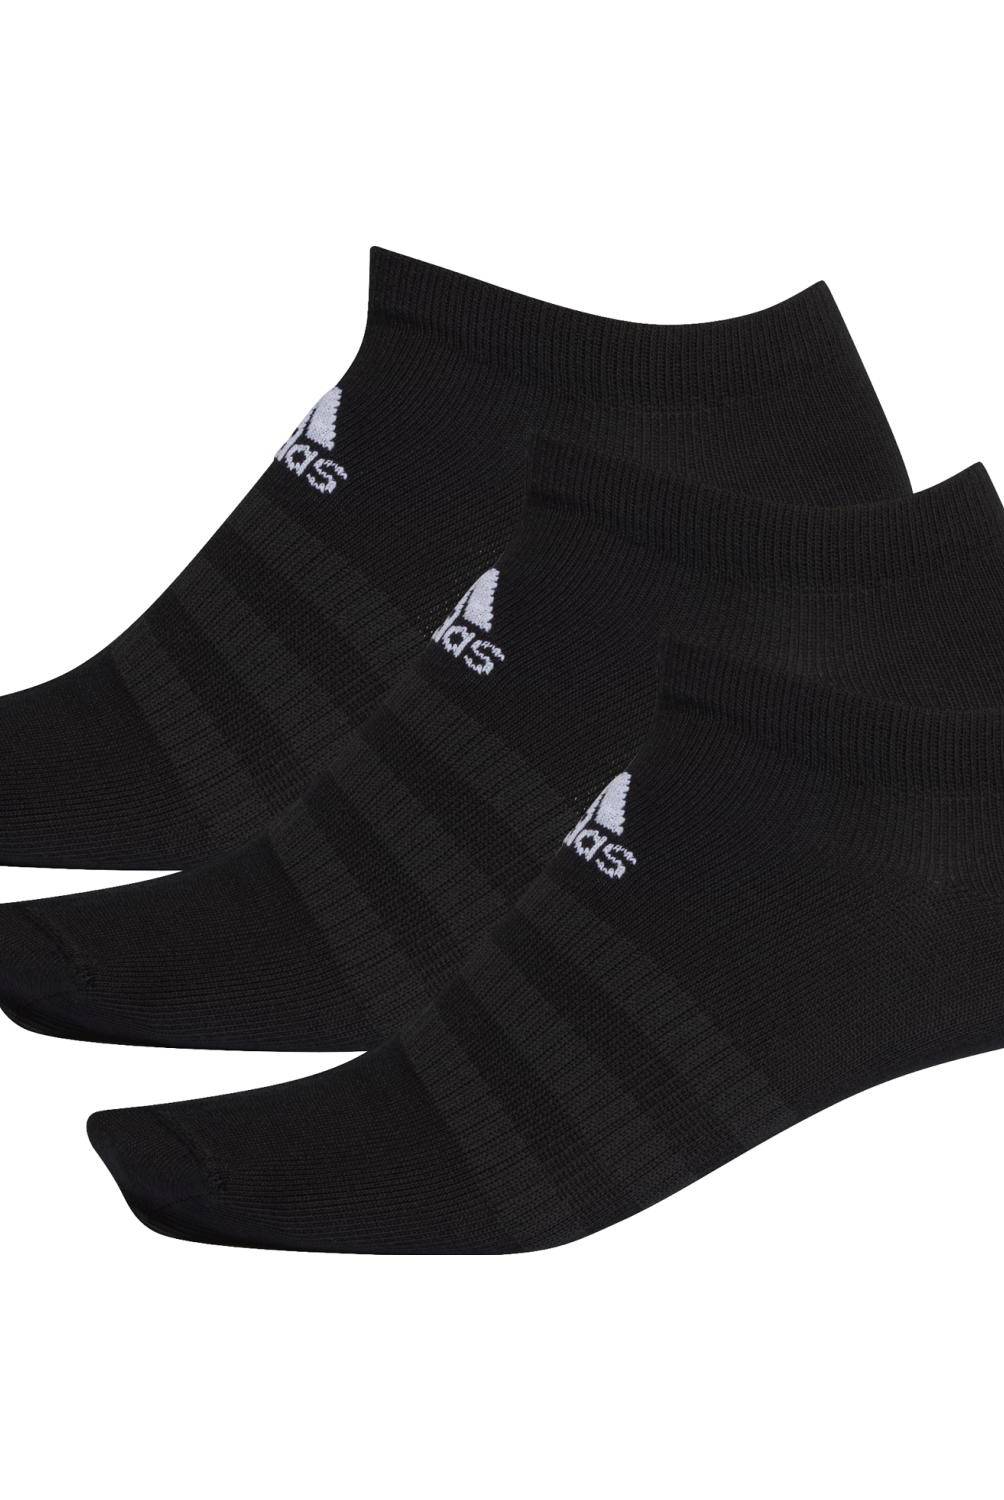 ADIDAS - Pack De 3 Calcetines Invisibles Deportivos Unisex Adidas